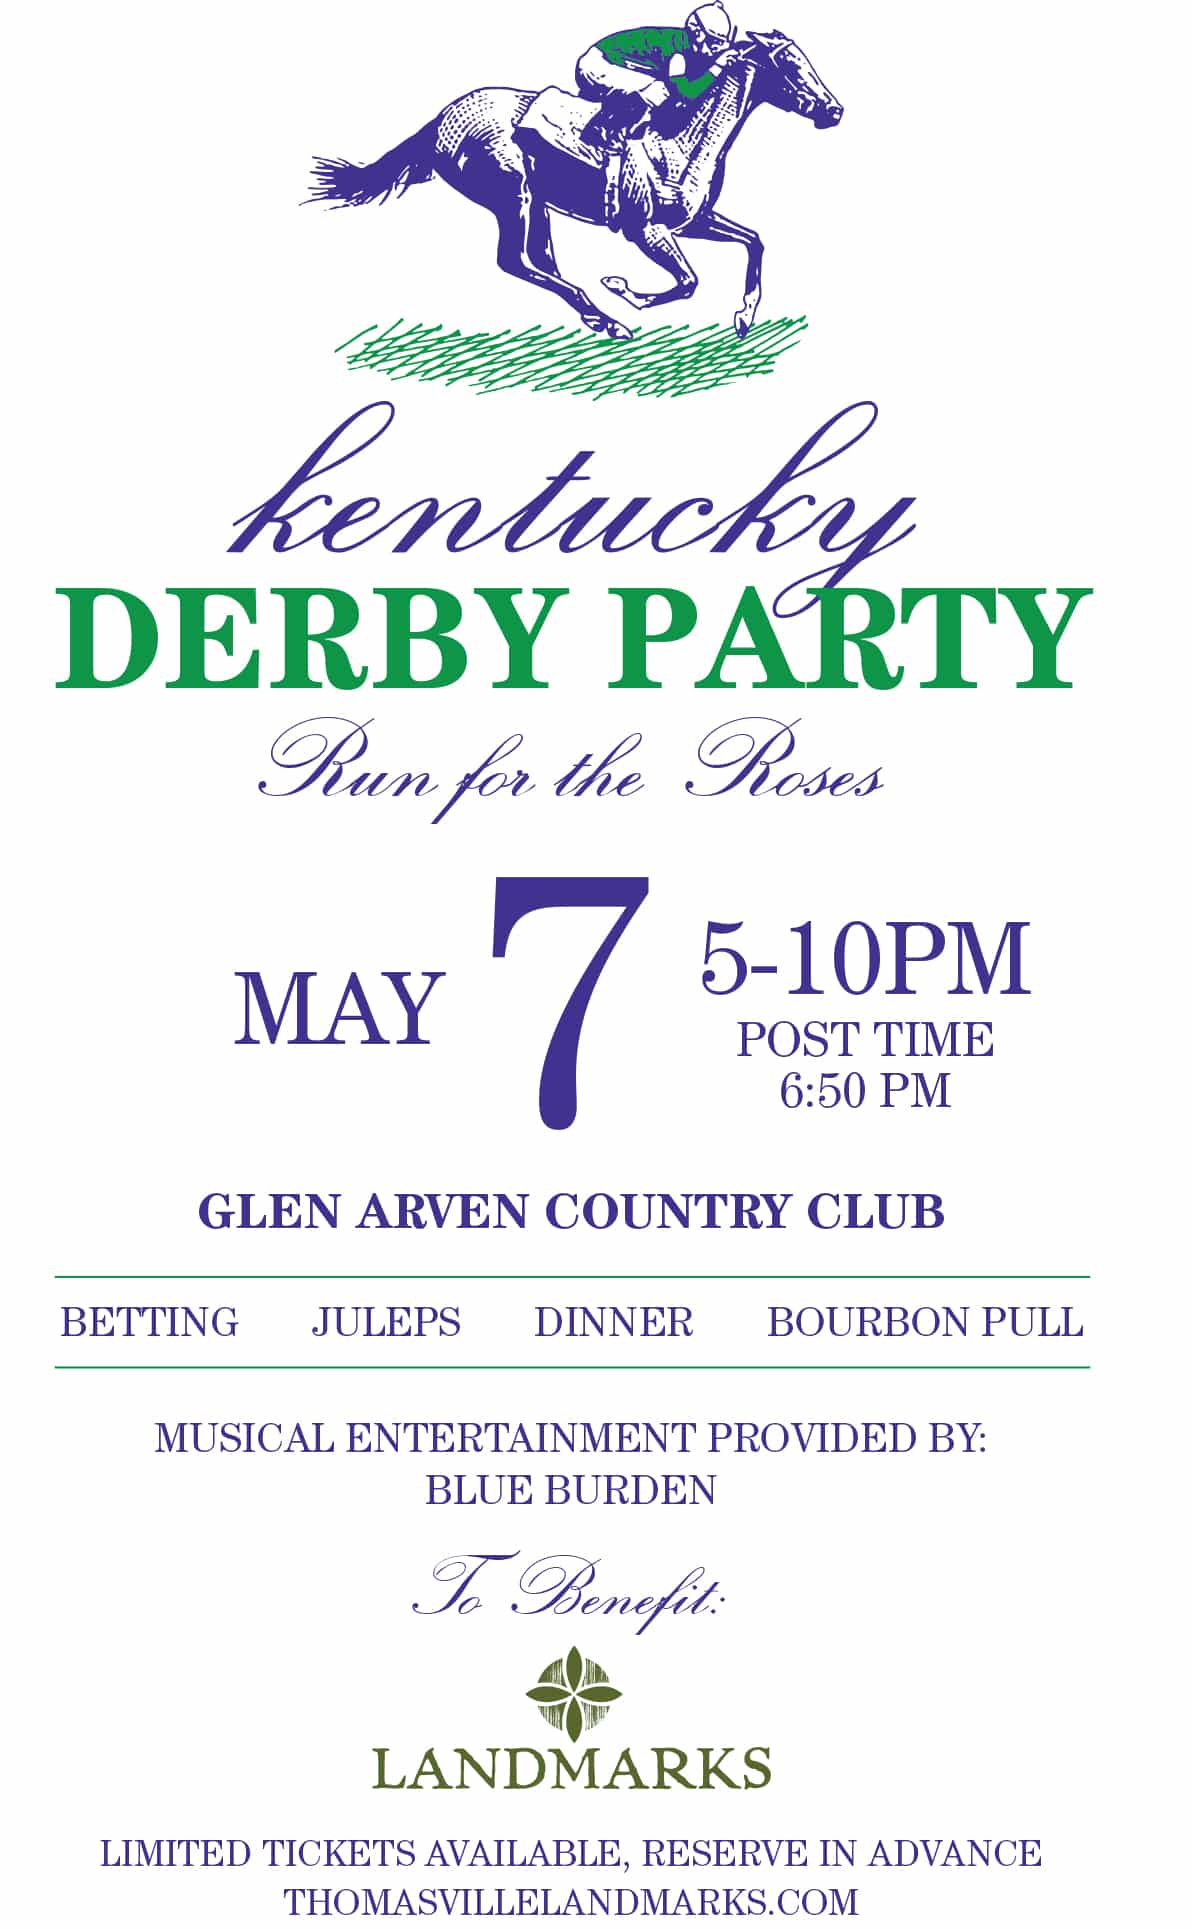 Thomasville Landmarks - 2022 Kentucky Derby Party